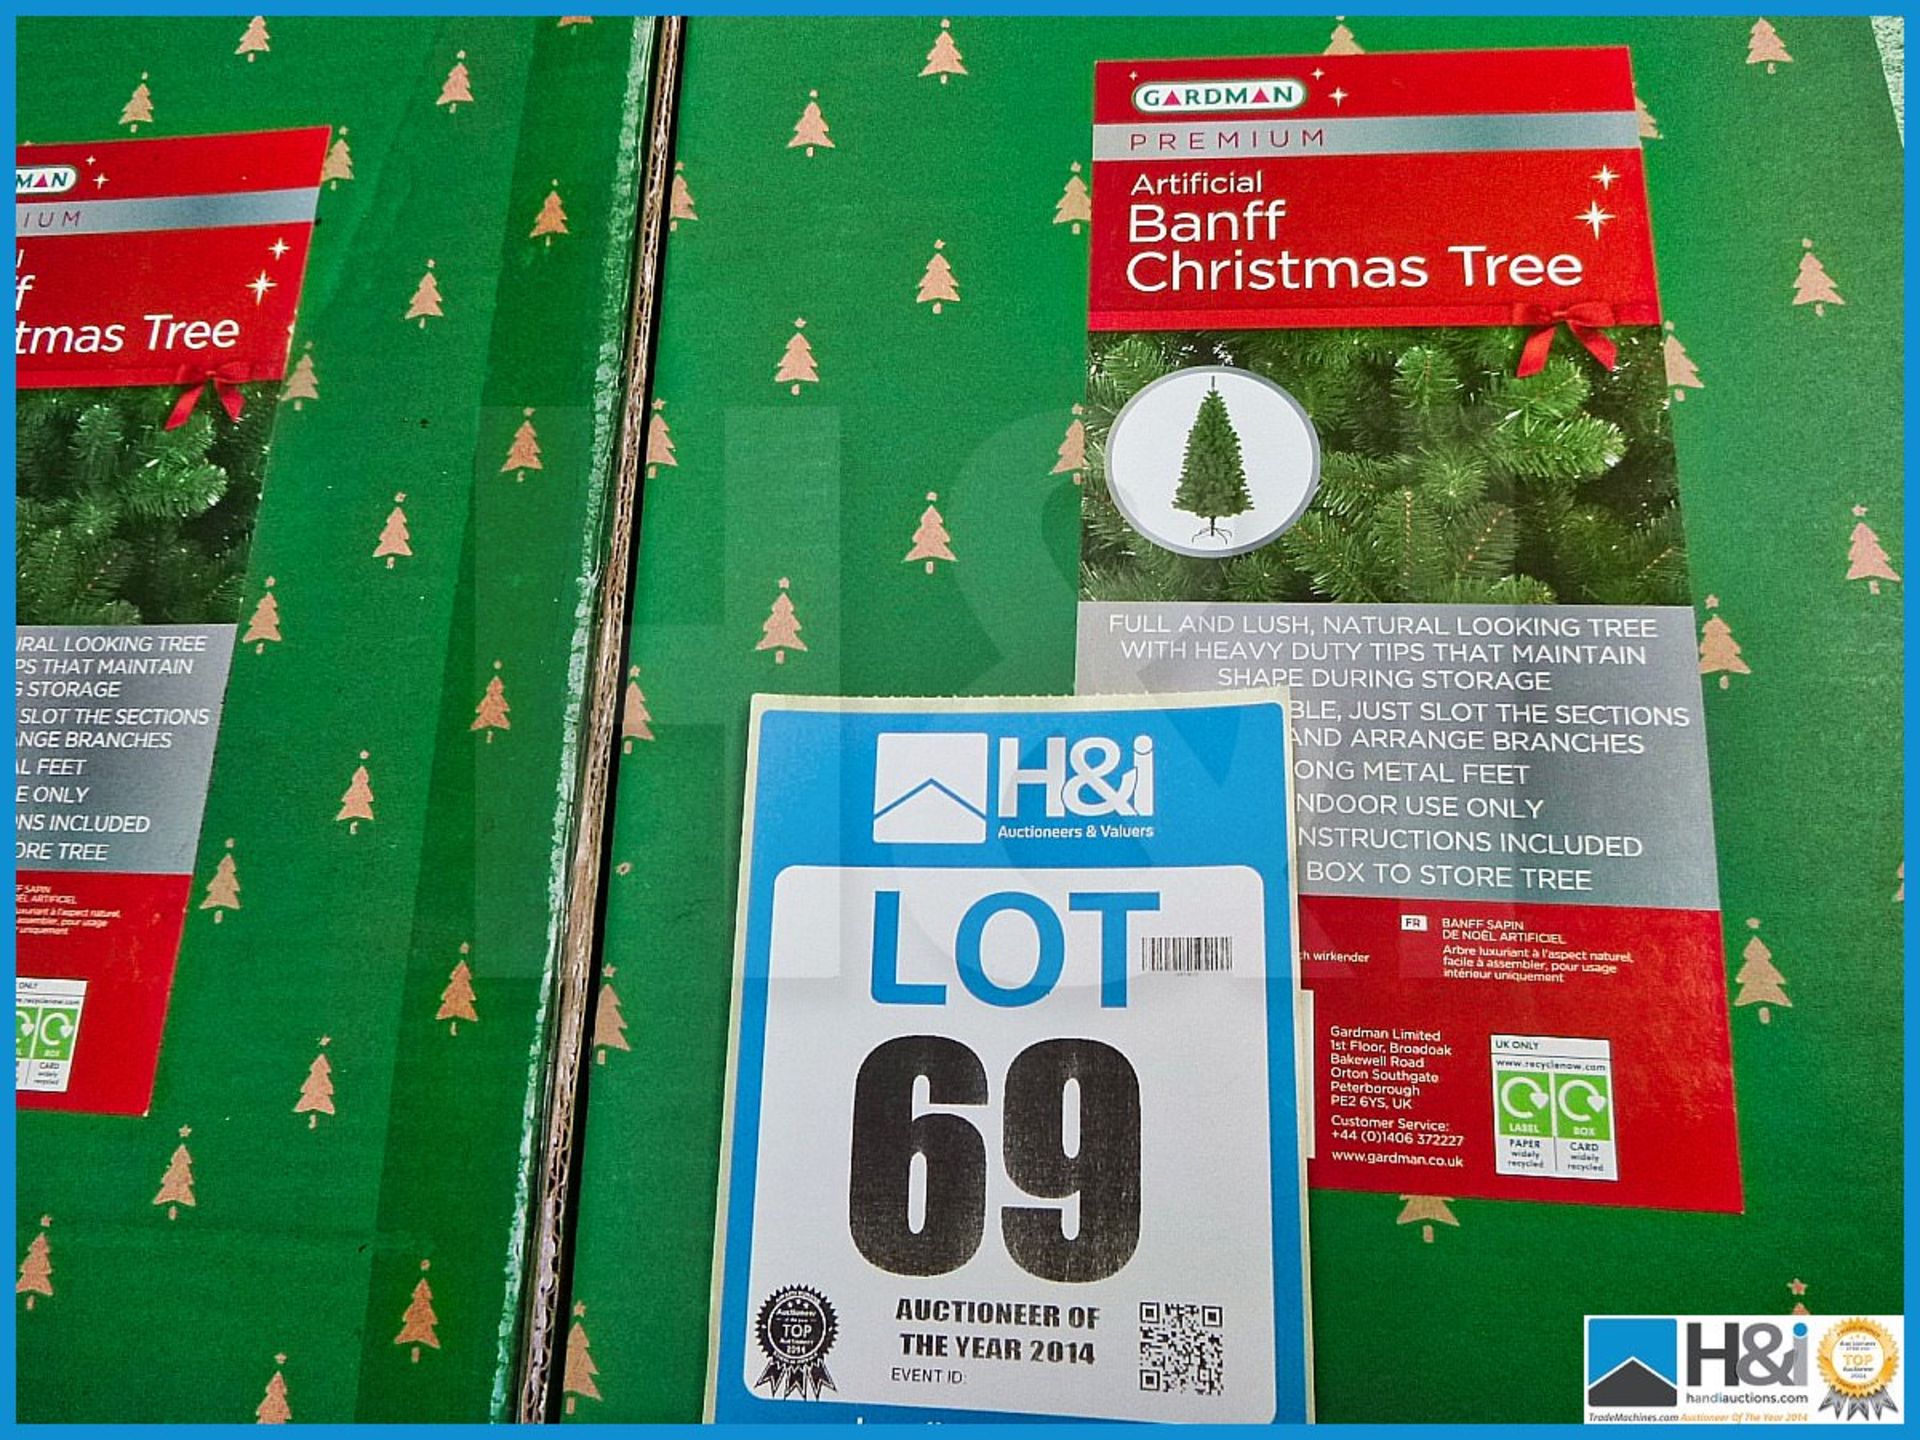 GARDMAN ARTIFICIAL 7' BANFF CHRISTMAS TREE , 43034XS, RRP £99.99, FULL AND LUSH NATURAL LOOKING TREE